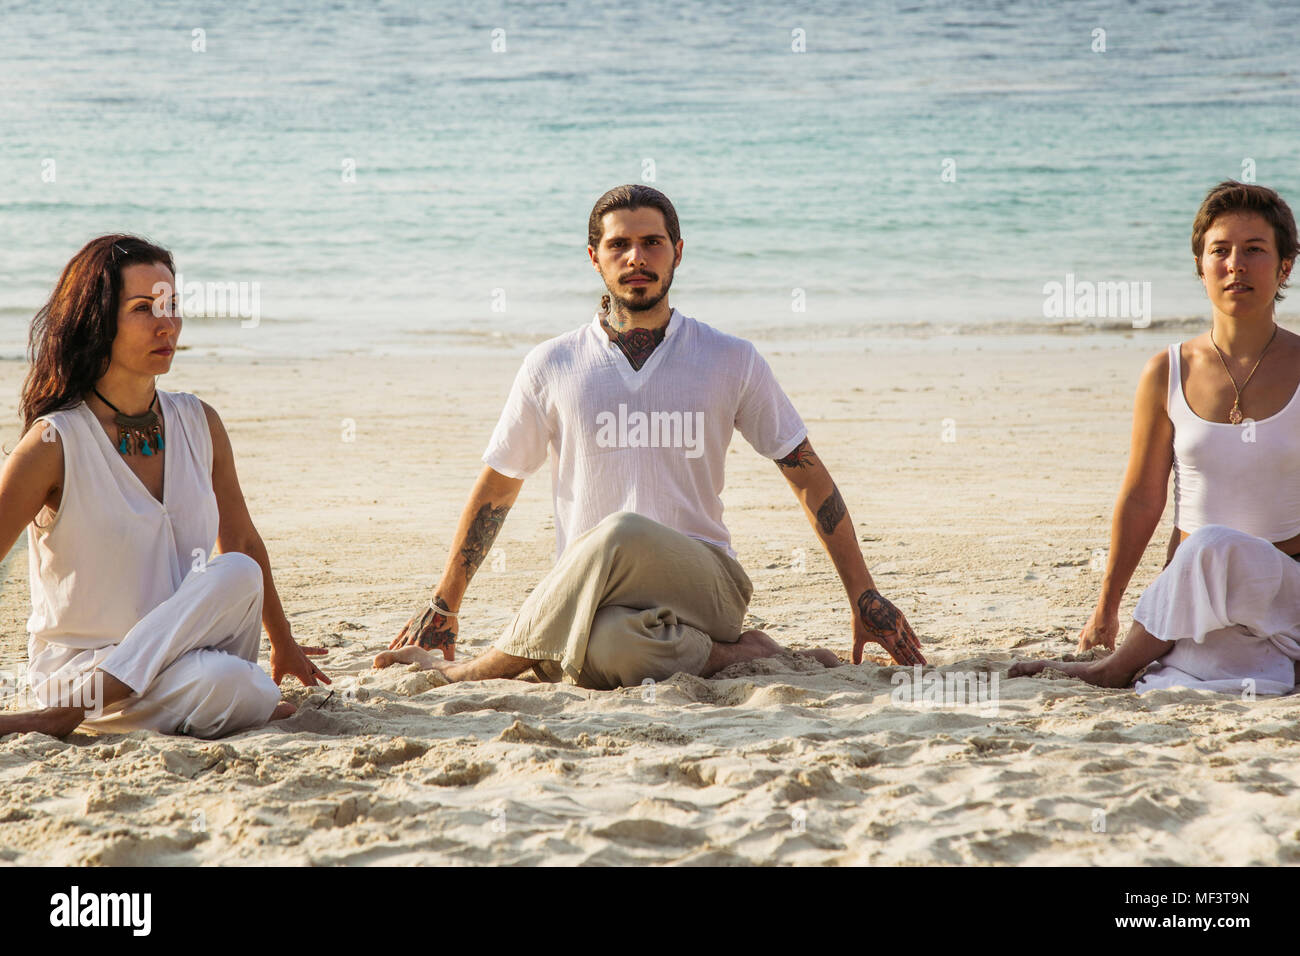 Thailand, Koh Phangan, three people doing yoga on a beach Stock Photo